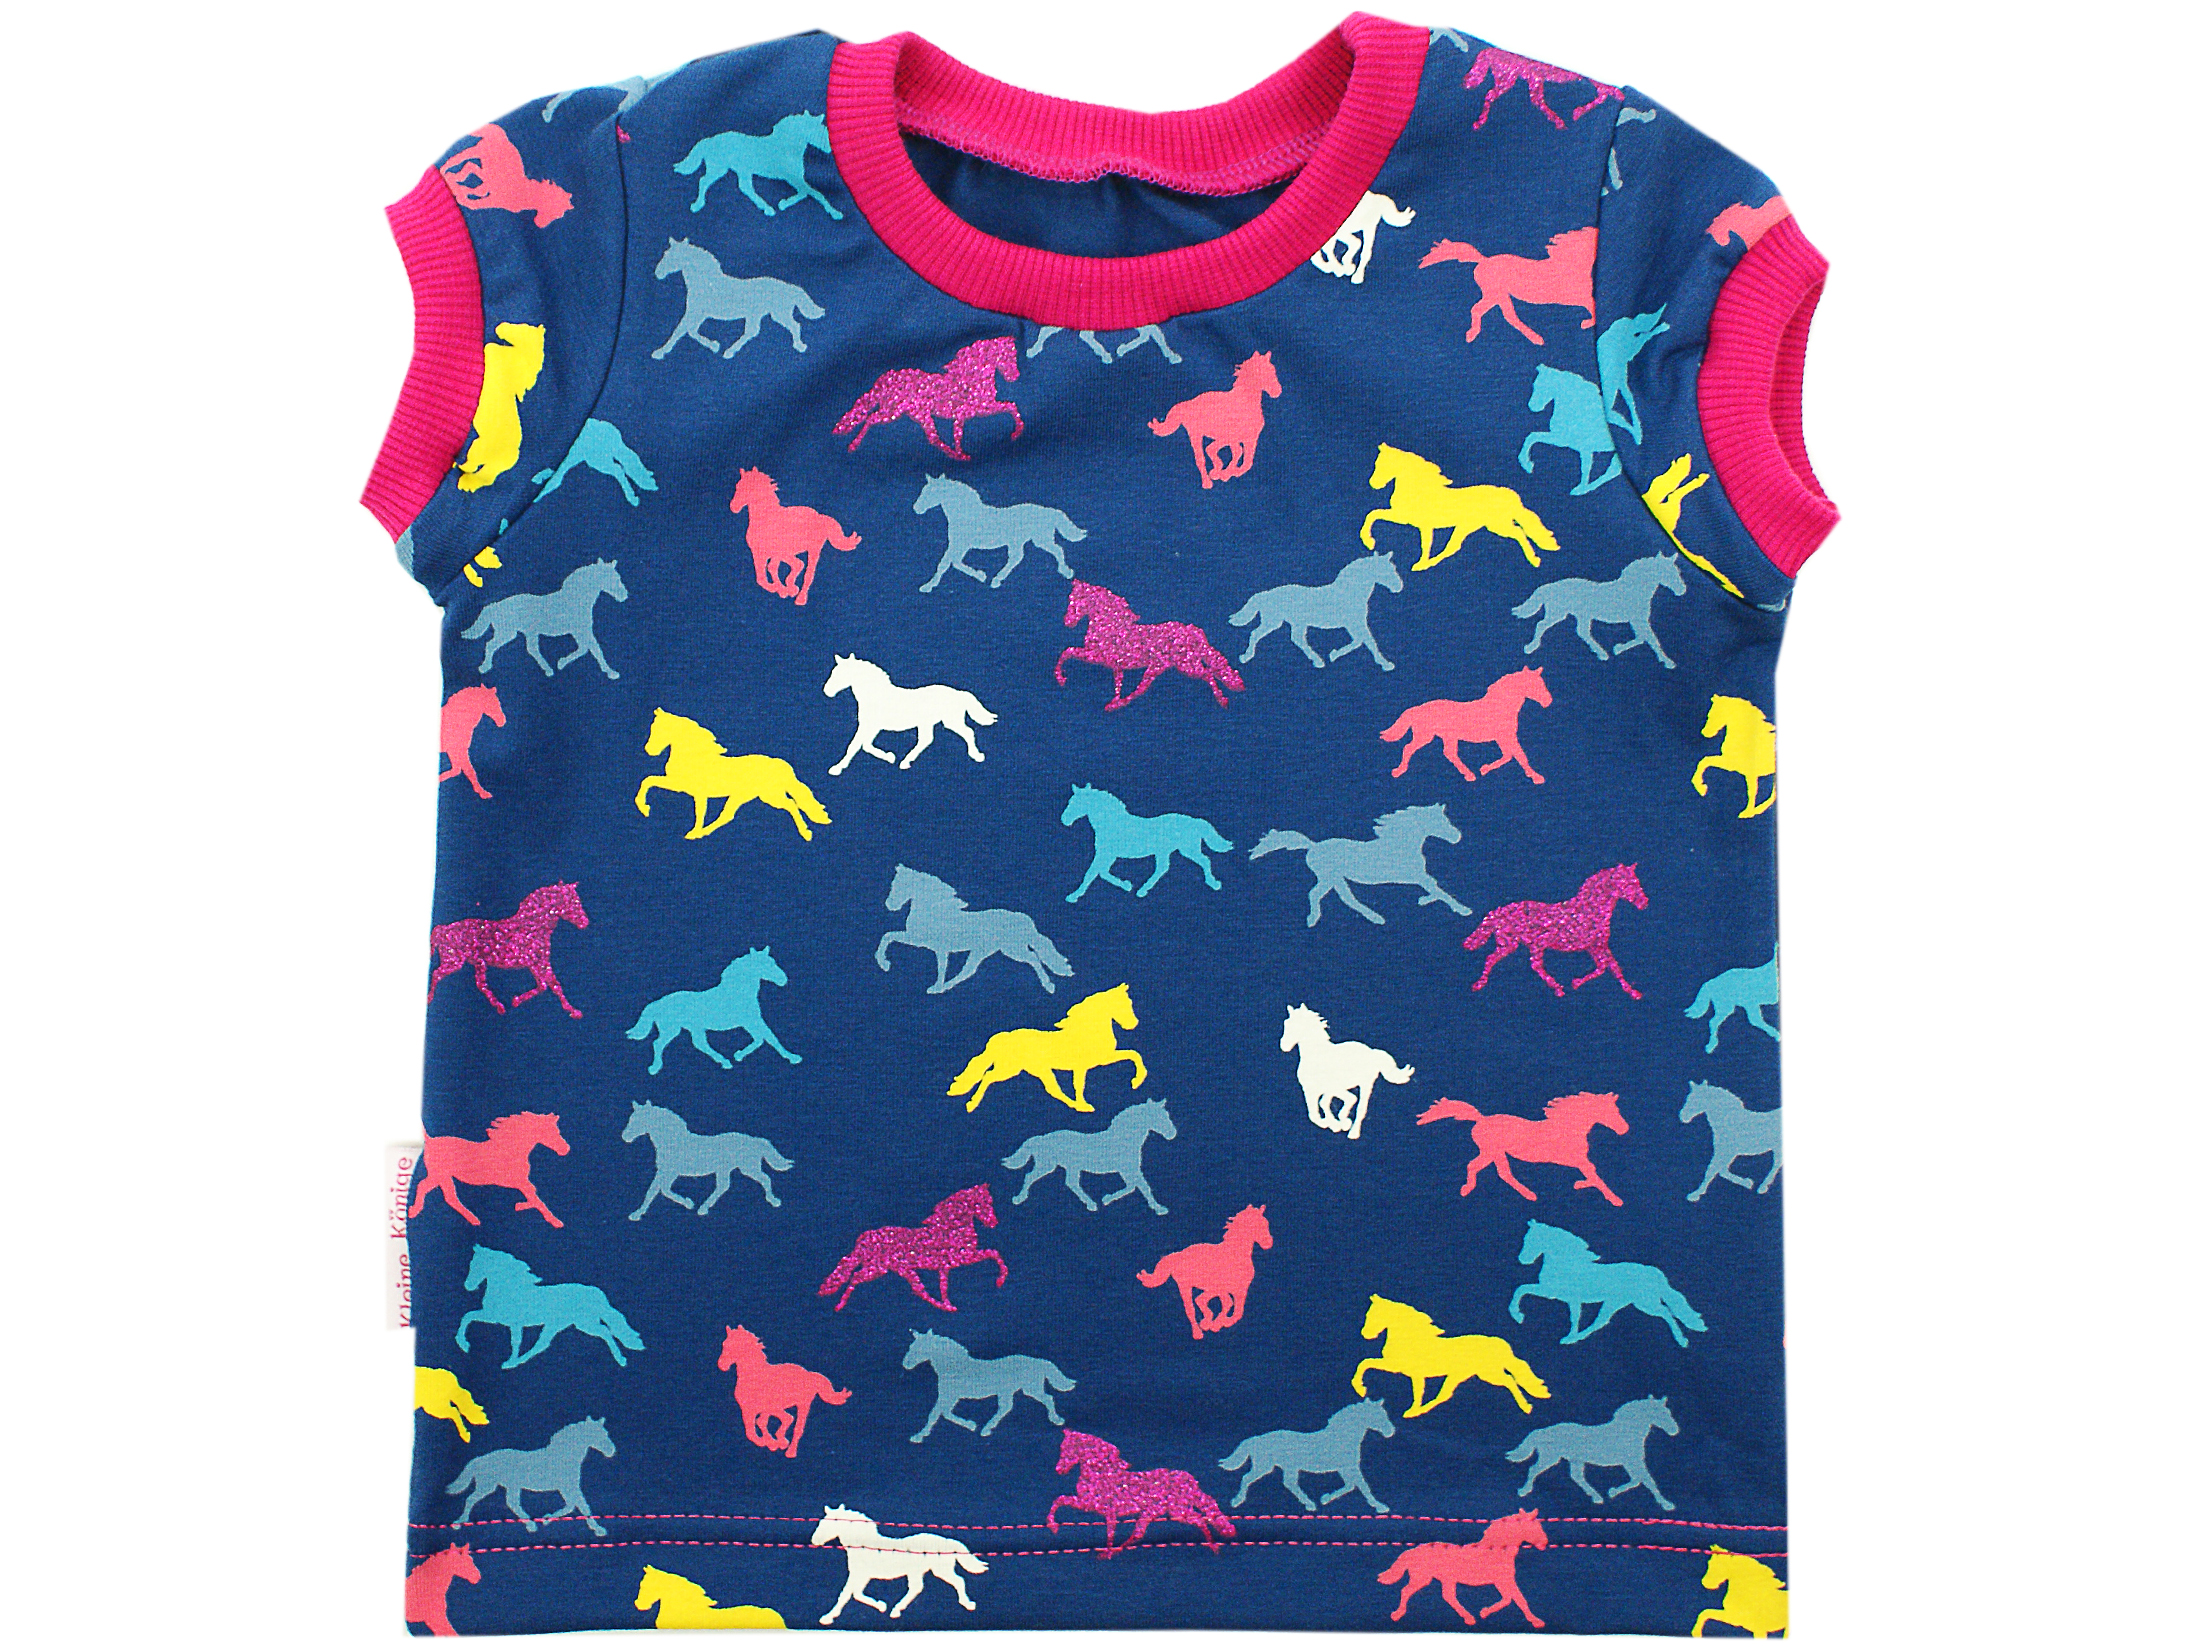  Kinder T-Shirt "Horses" blau pink 74/80